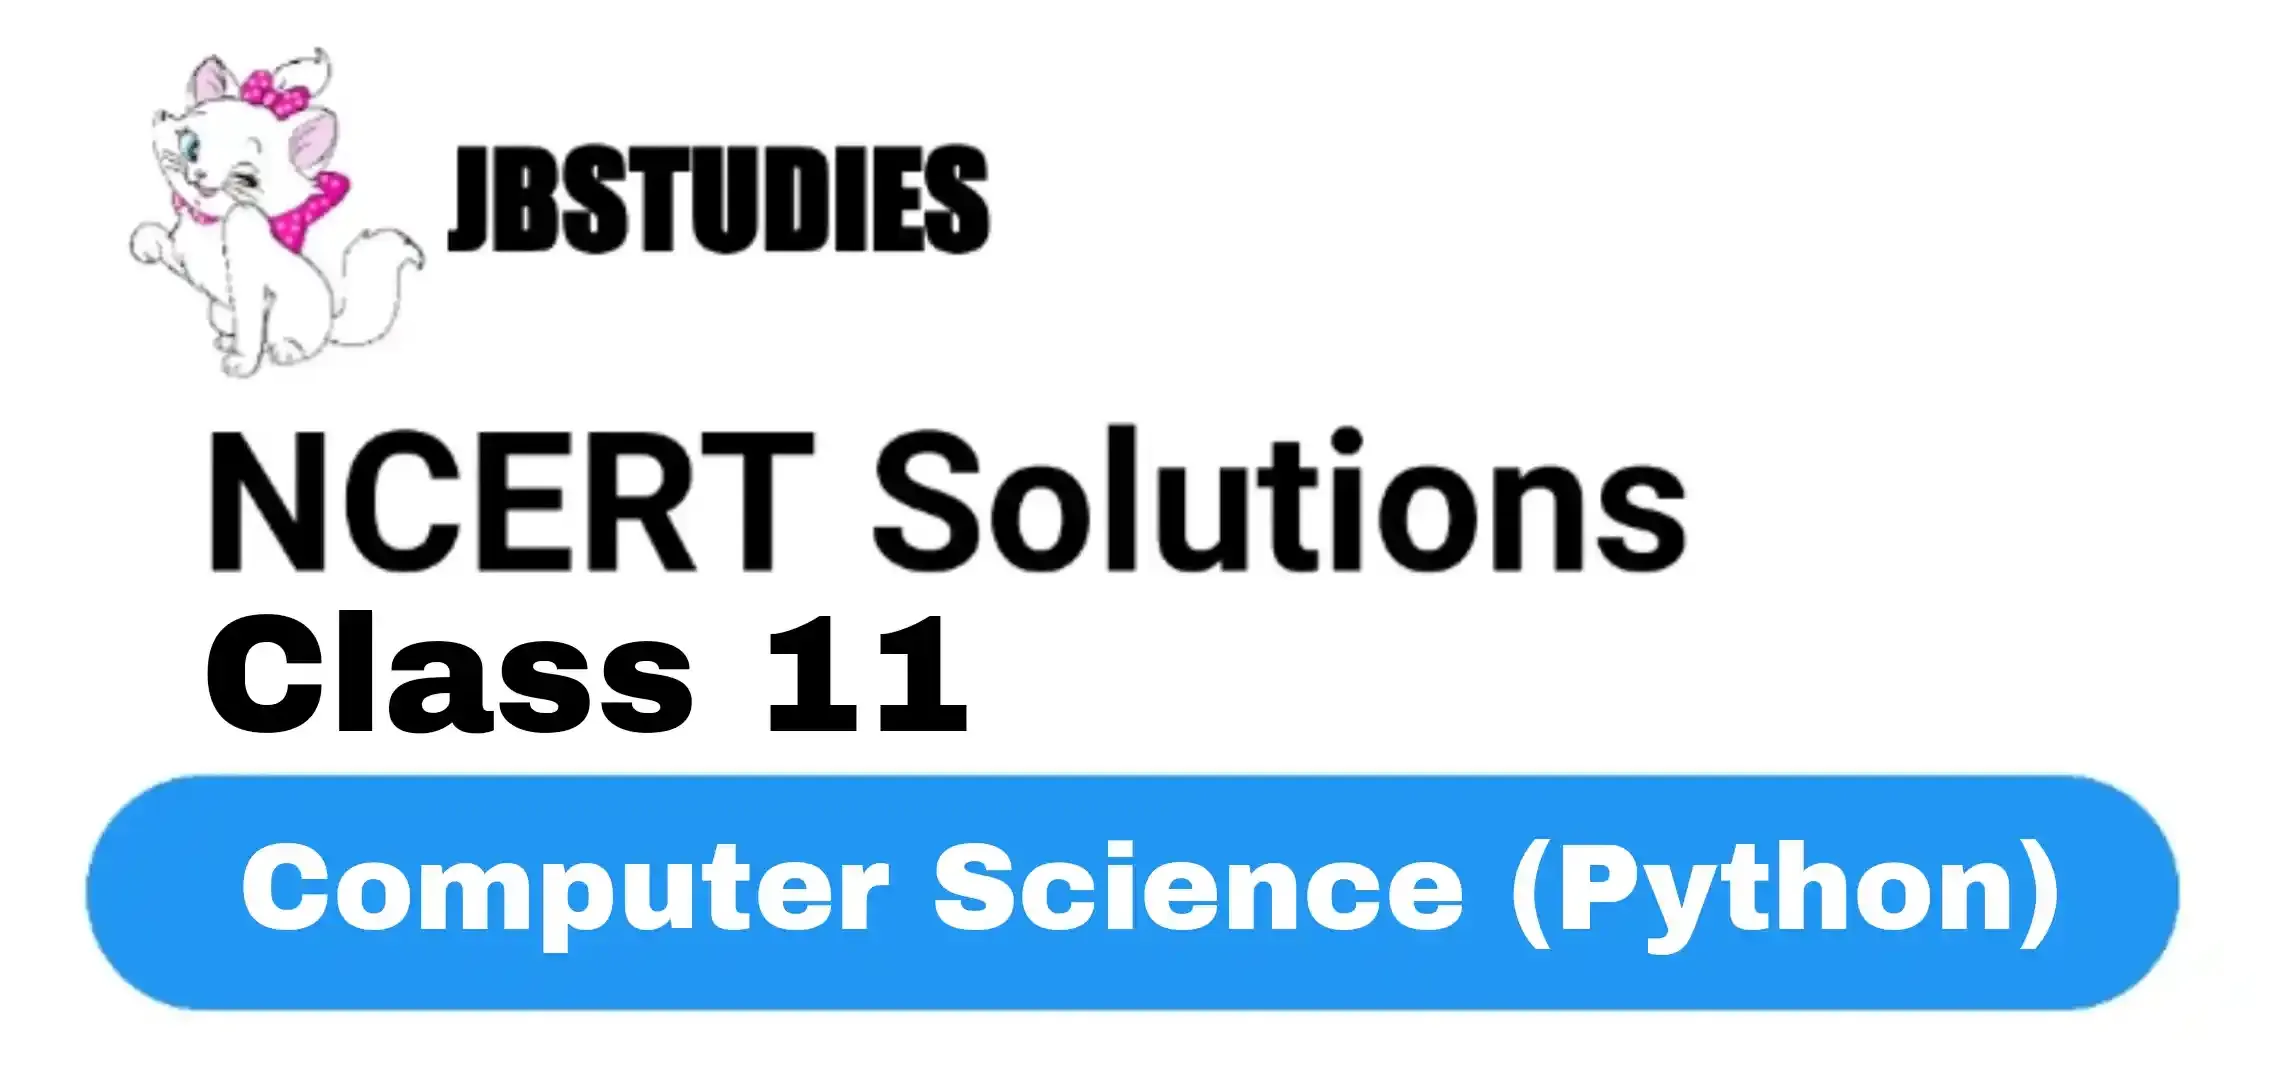 NCERT Solutions Class 11 Computer Science (Python)